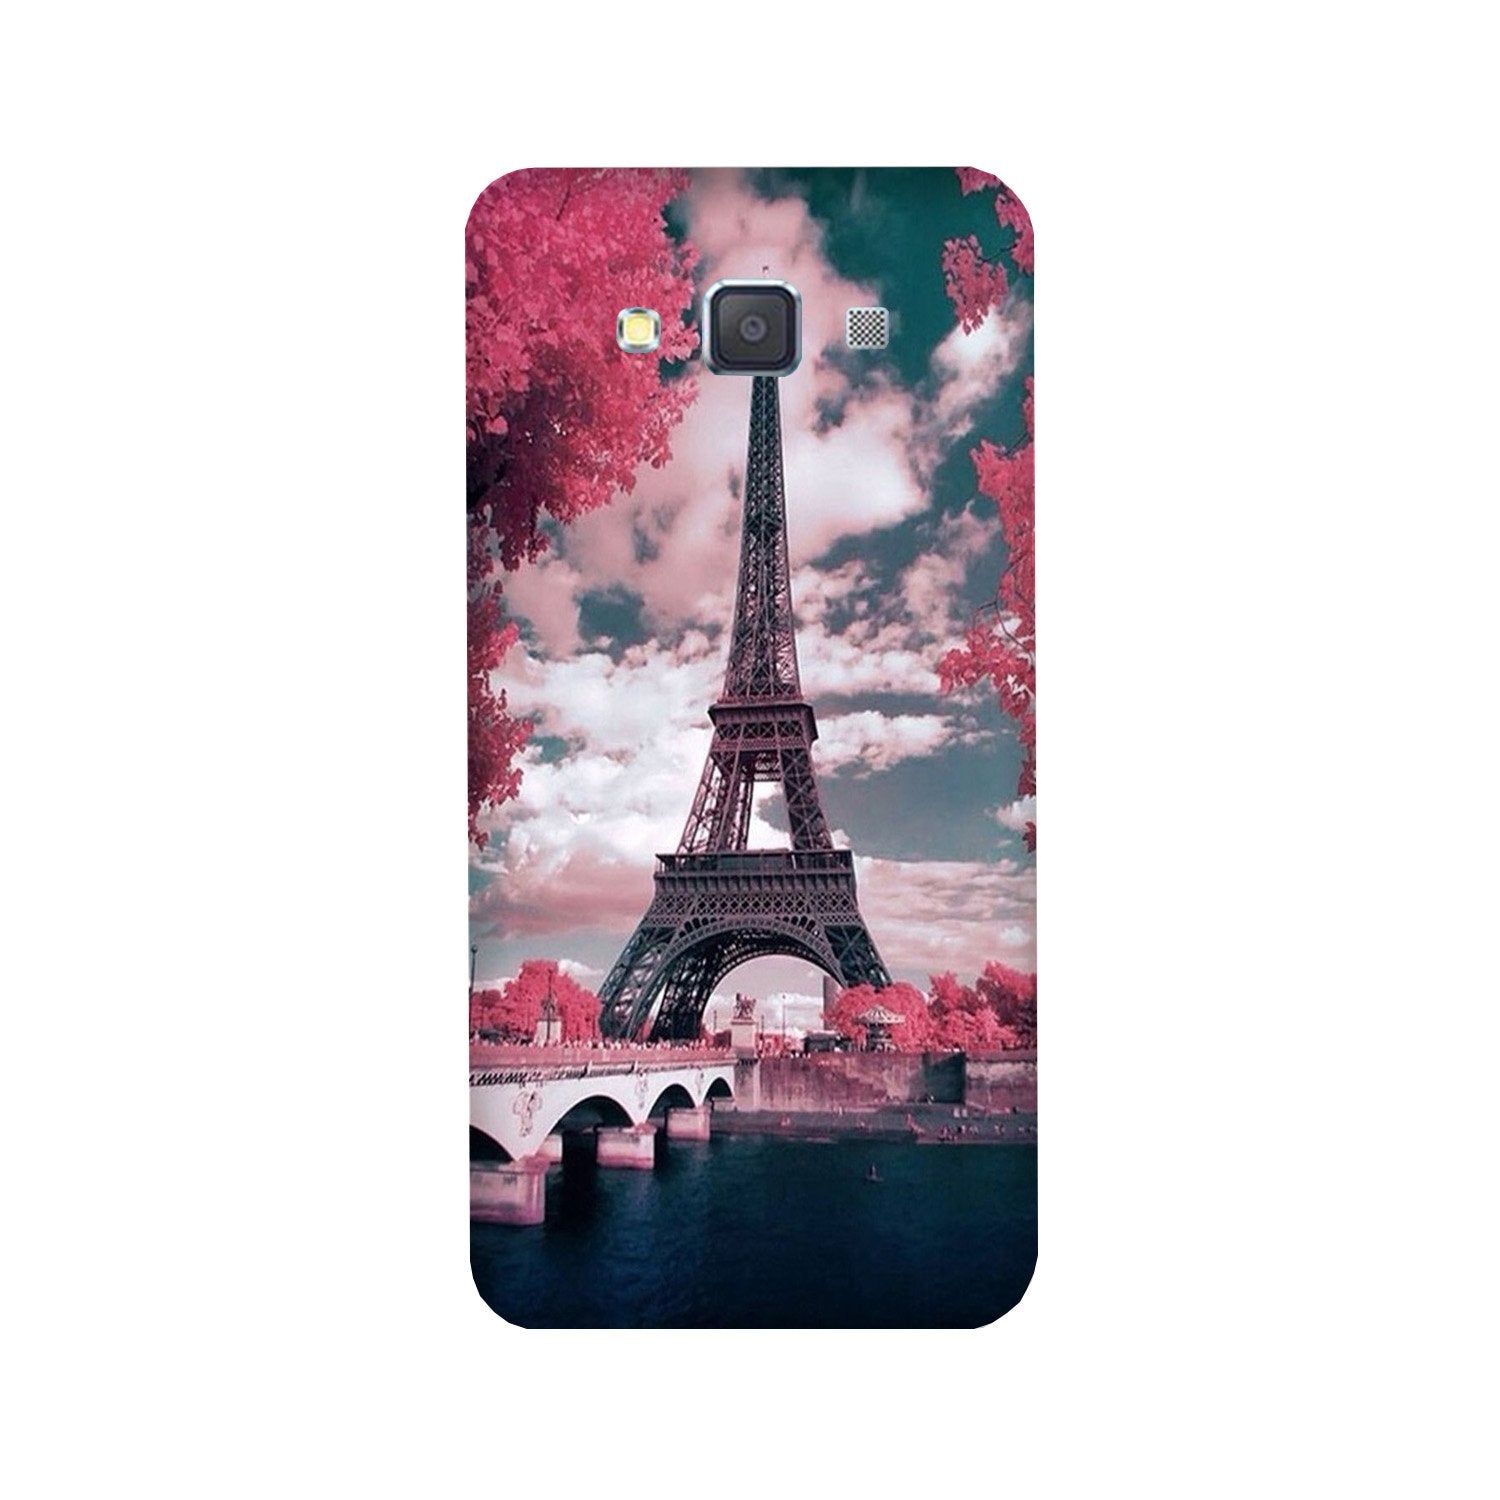 Eiffel Tower Case for Galaxy E5  (Design - 101)